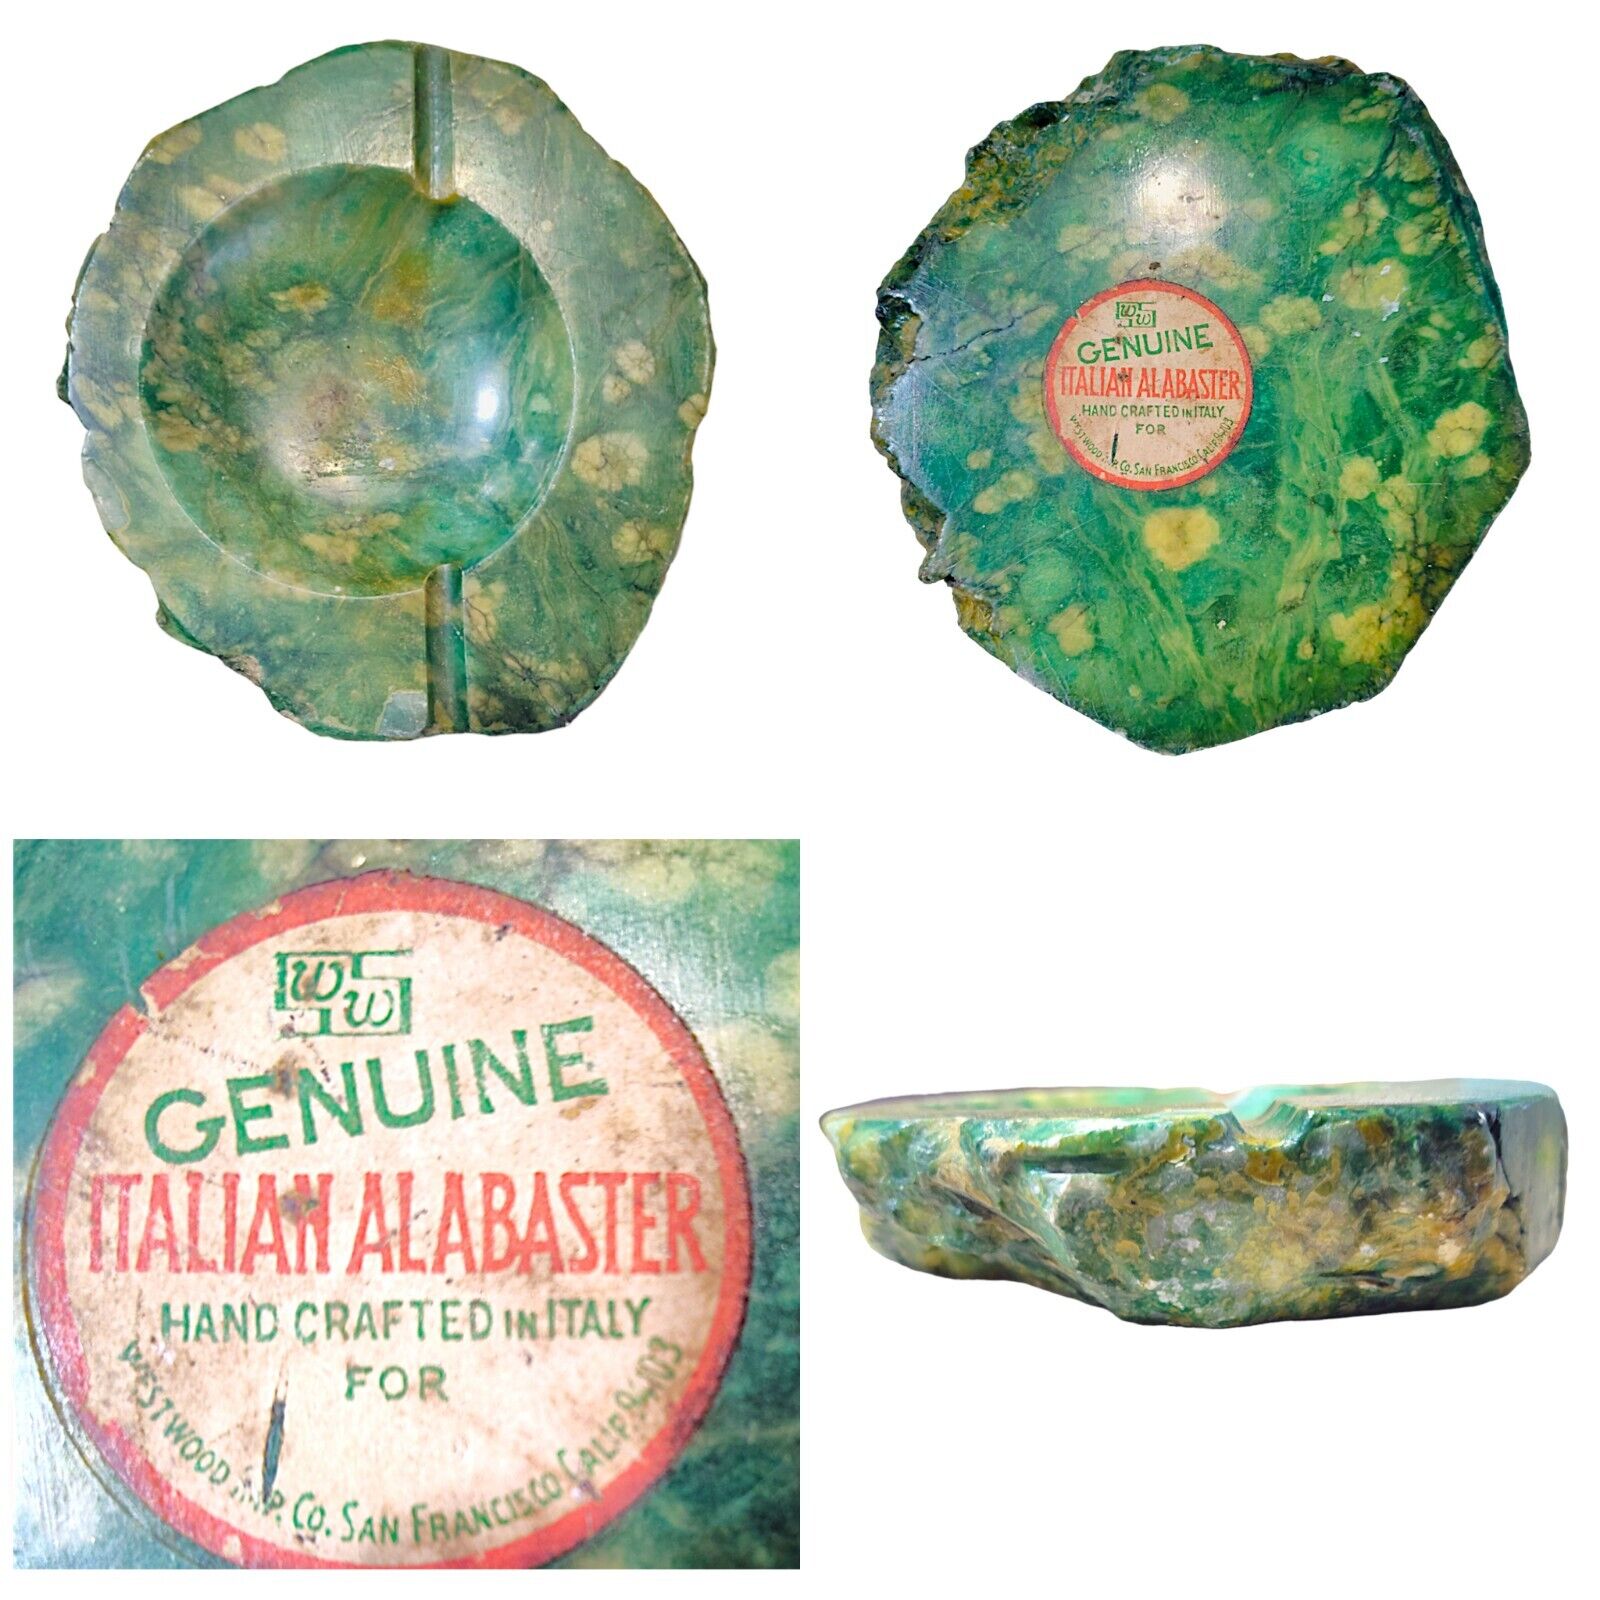 VTG Genuine Italian Alabaster Ashtray